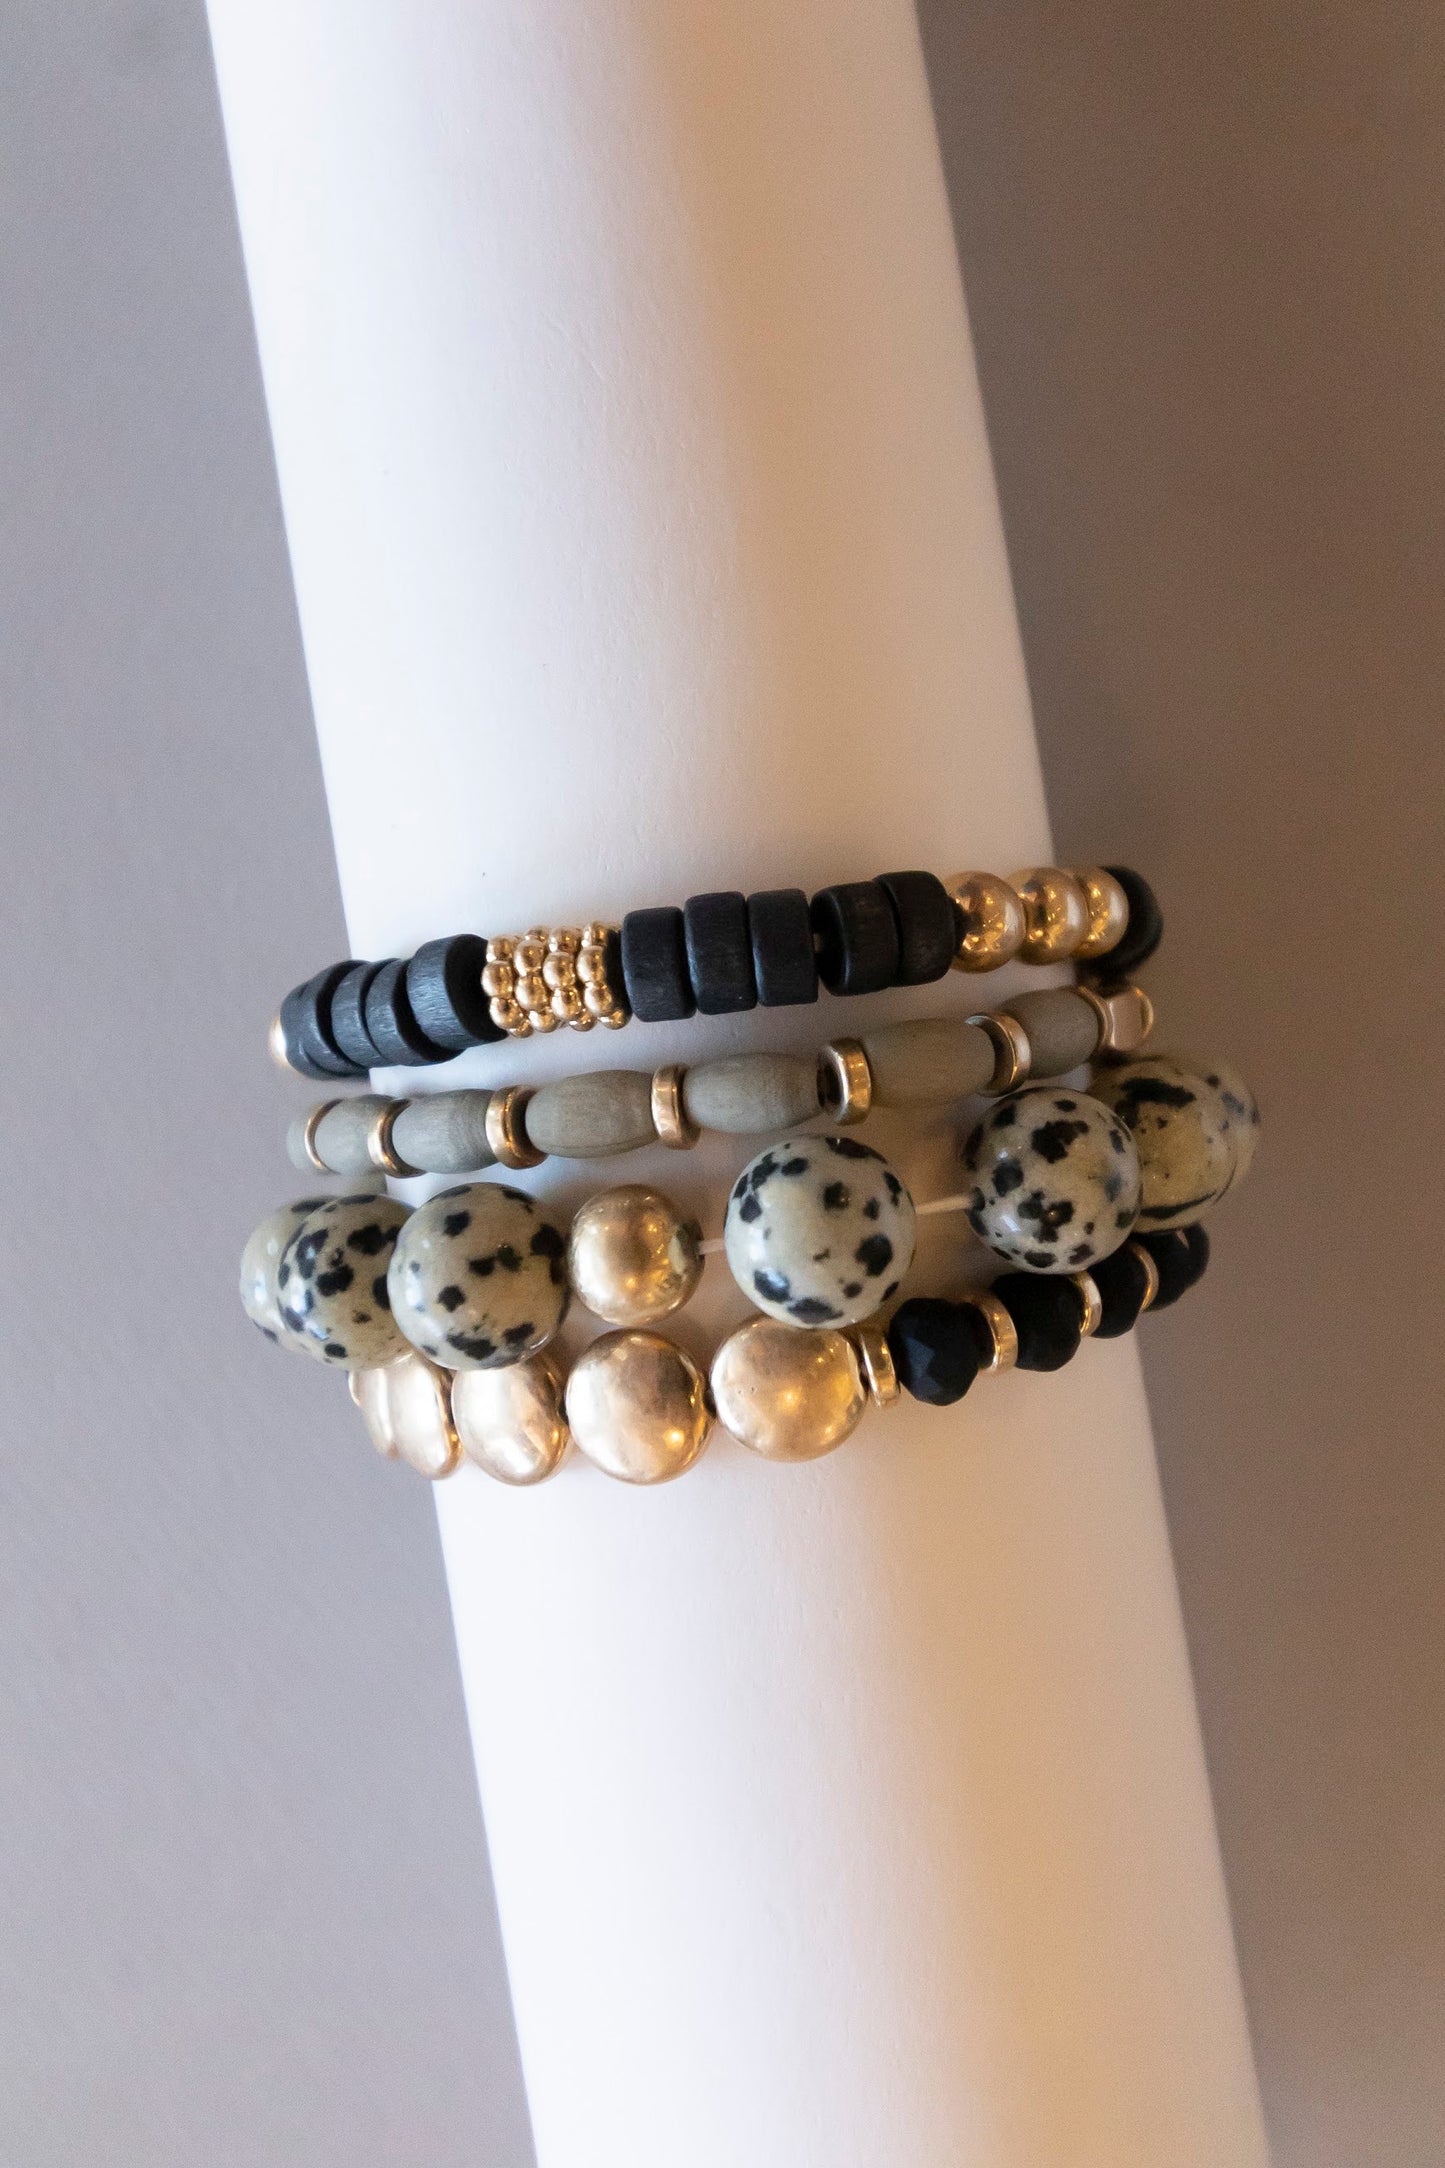 Helen Smokey Bracelet Stack | Grayscale Marble Wood Beaded Layering Bracelet